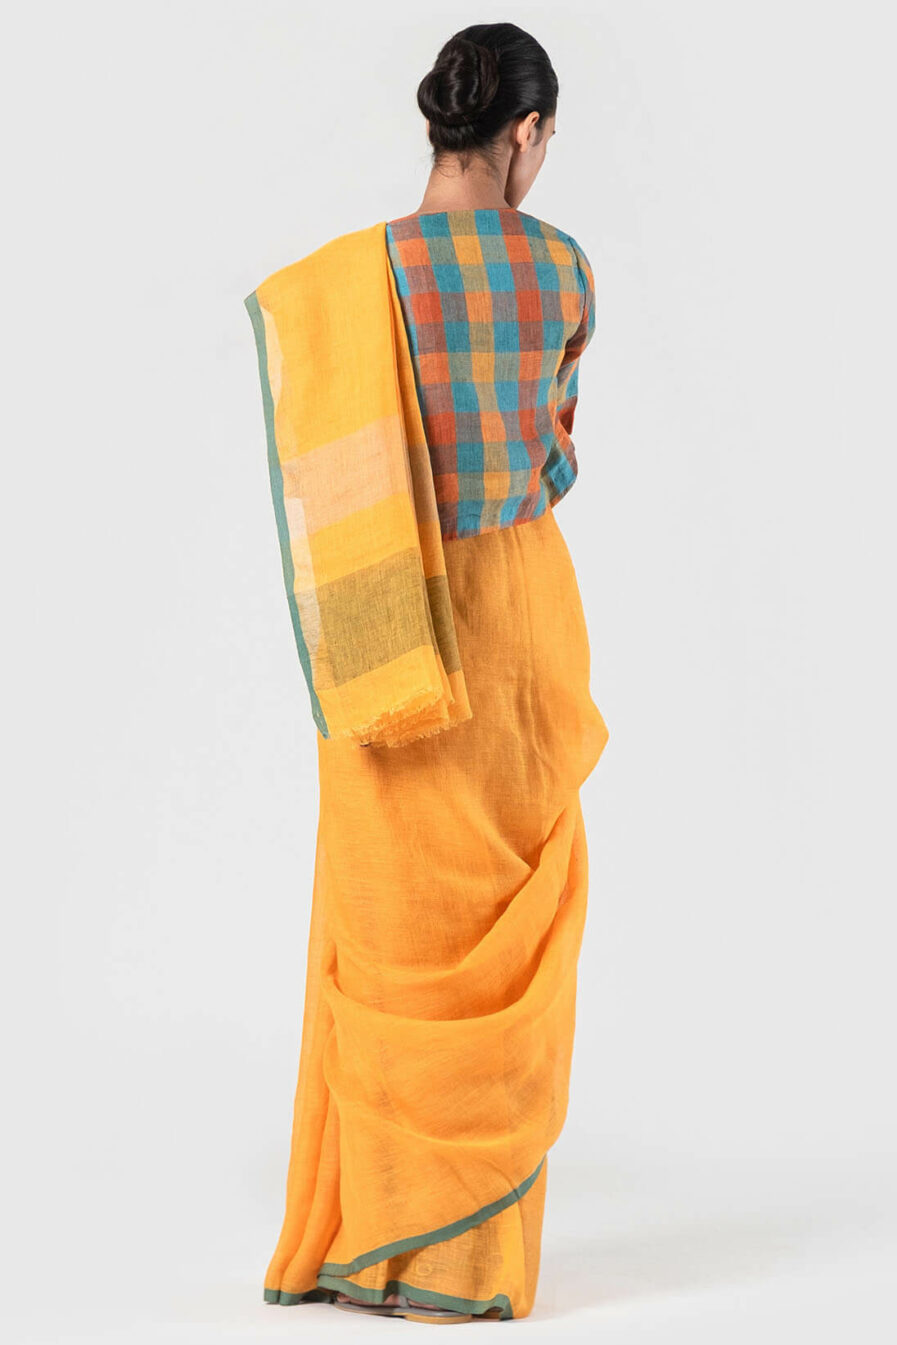 Anavila Orange Teal and plum selvedge linen sari